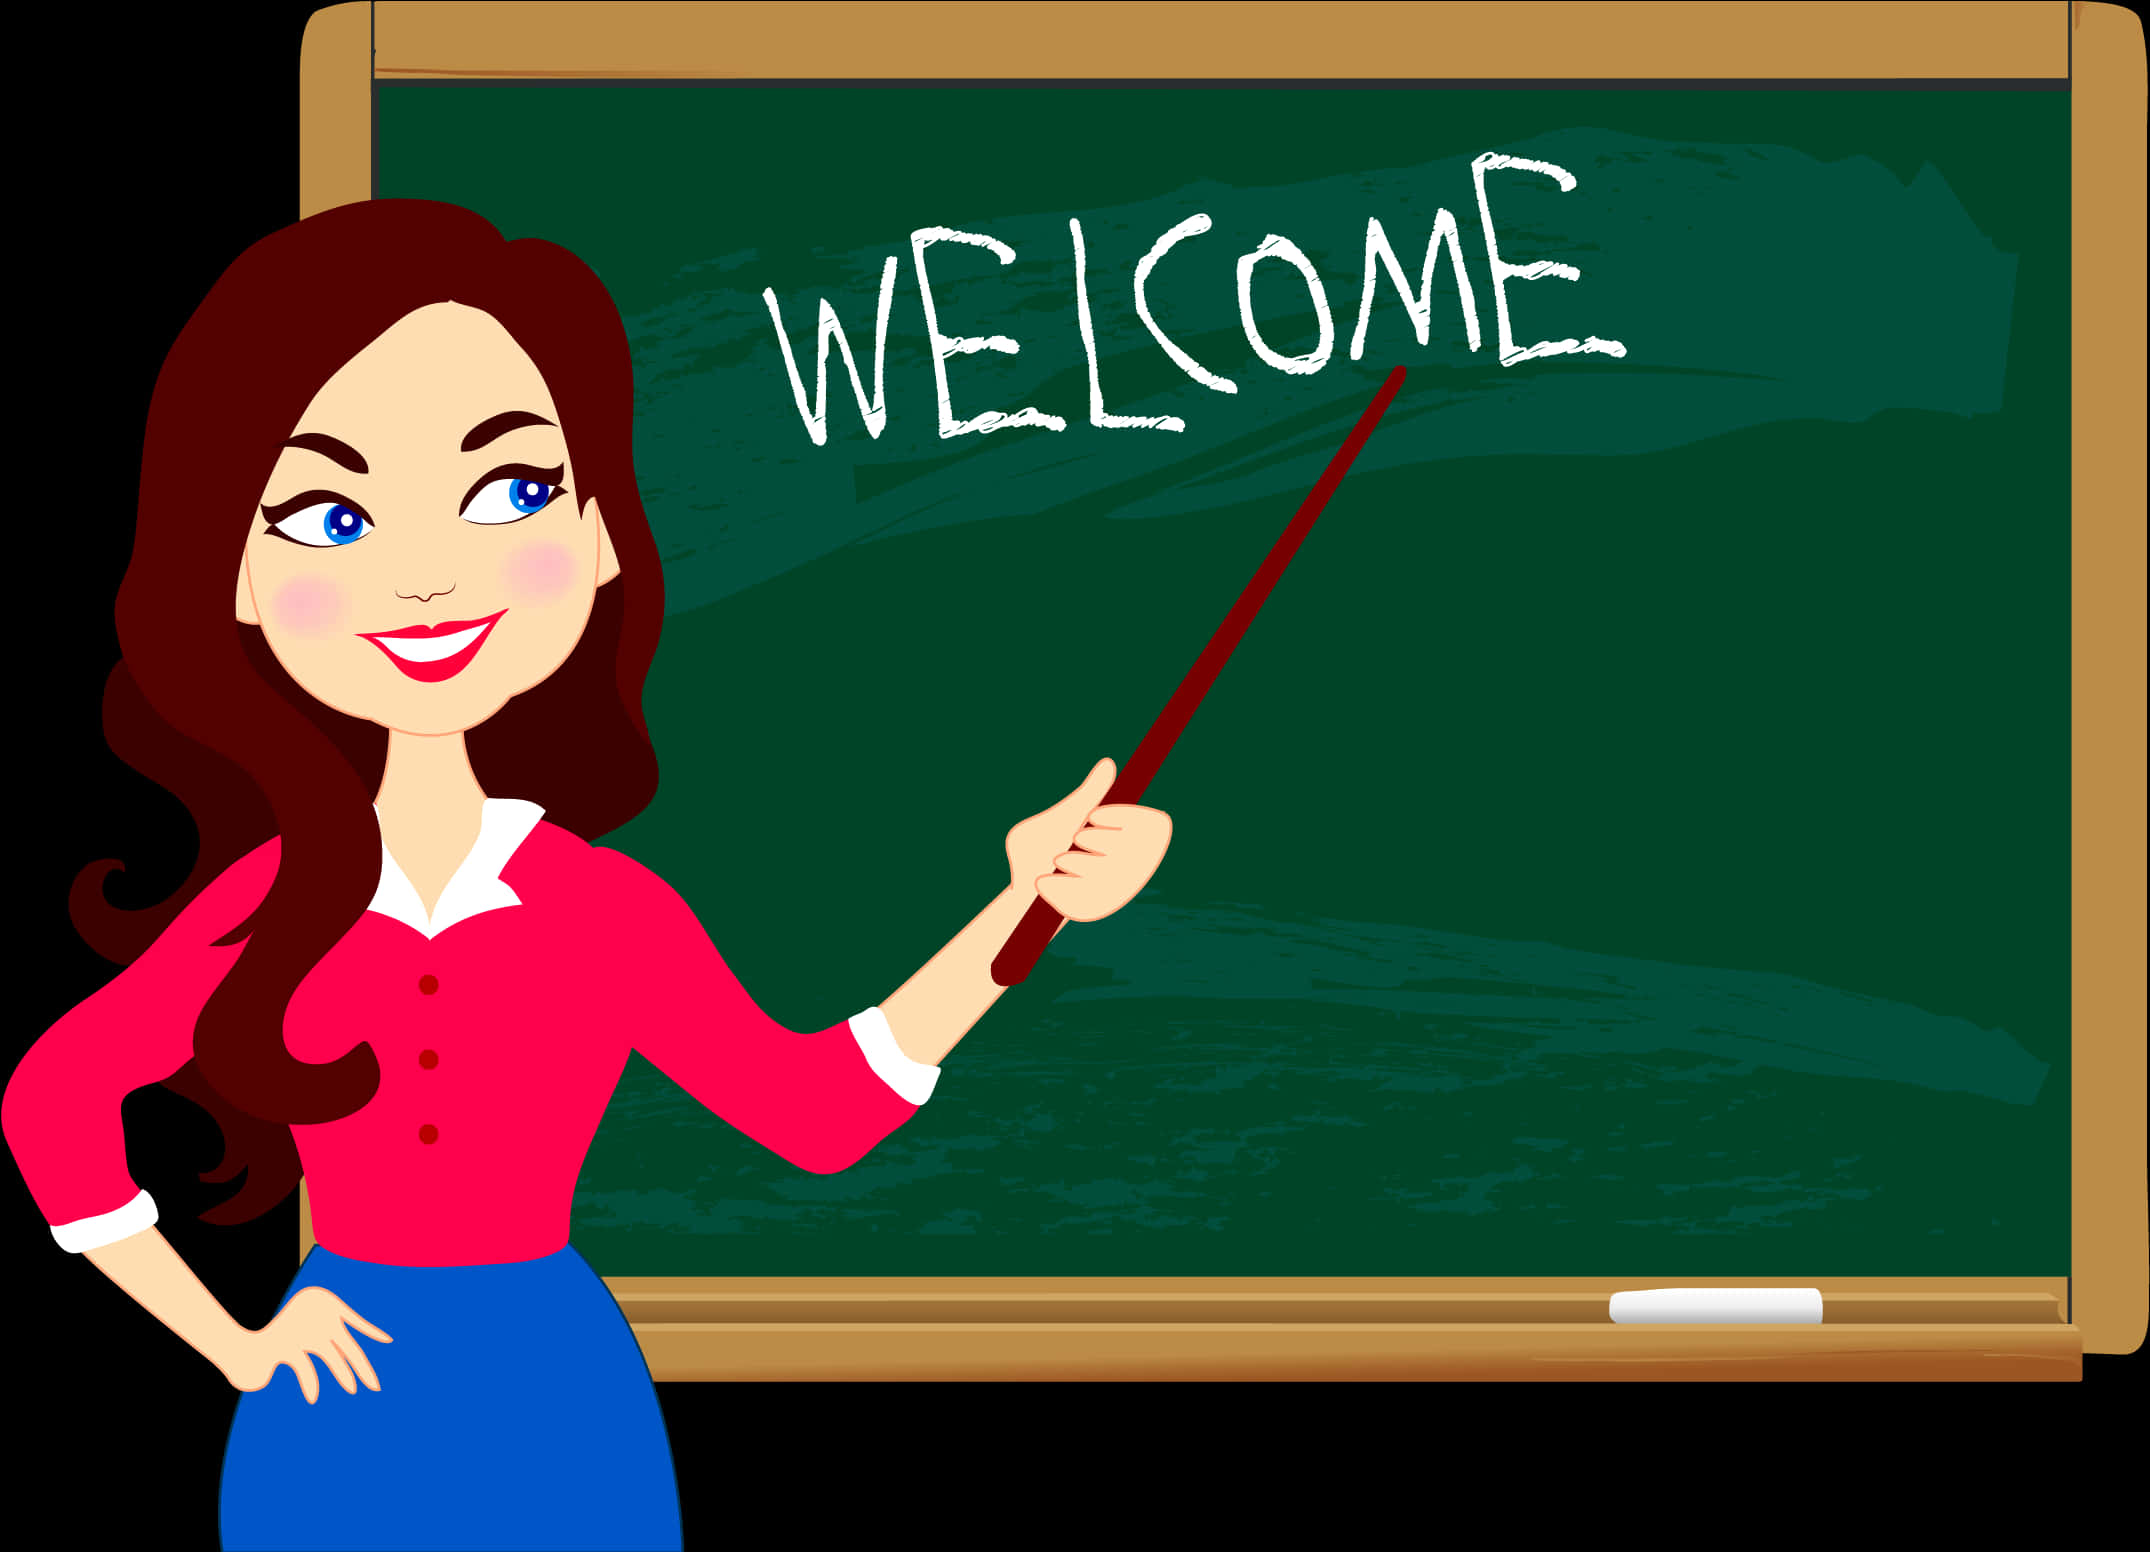 Animated Teacher Welcome Chalkboard PNG image